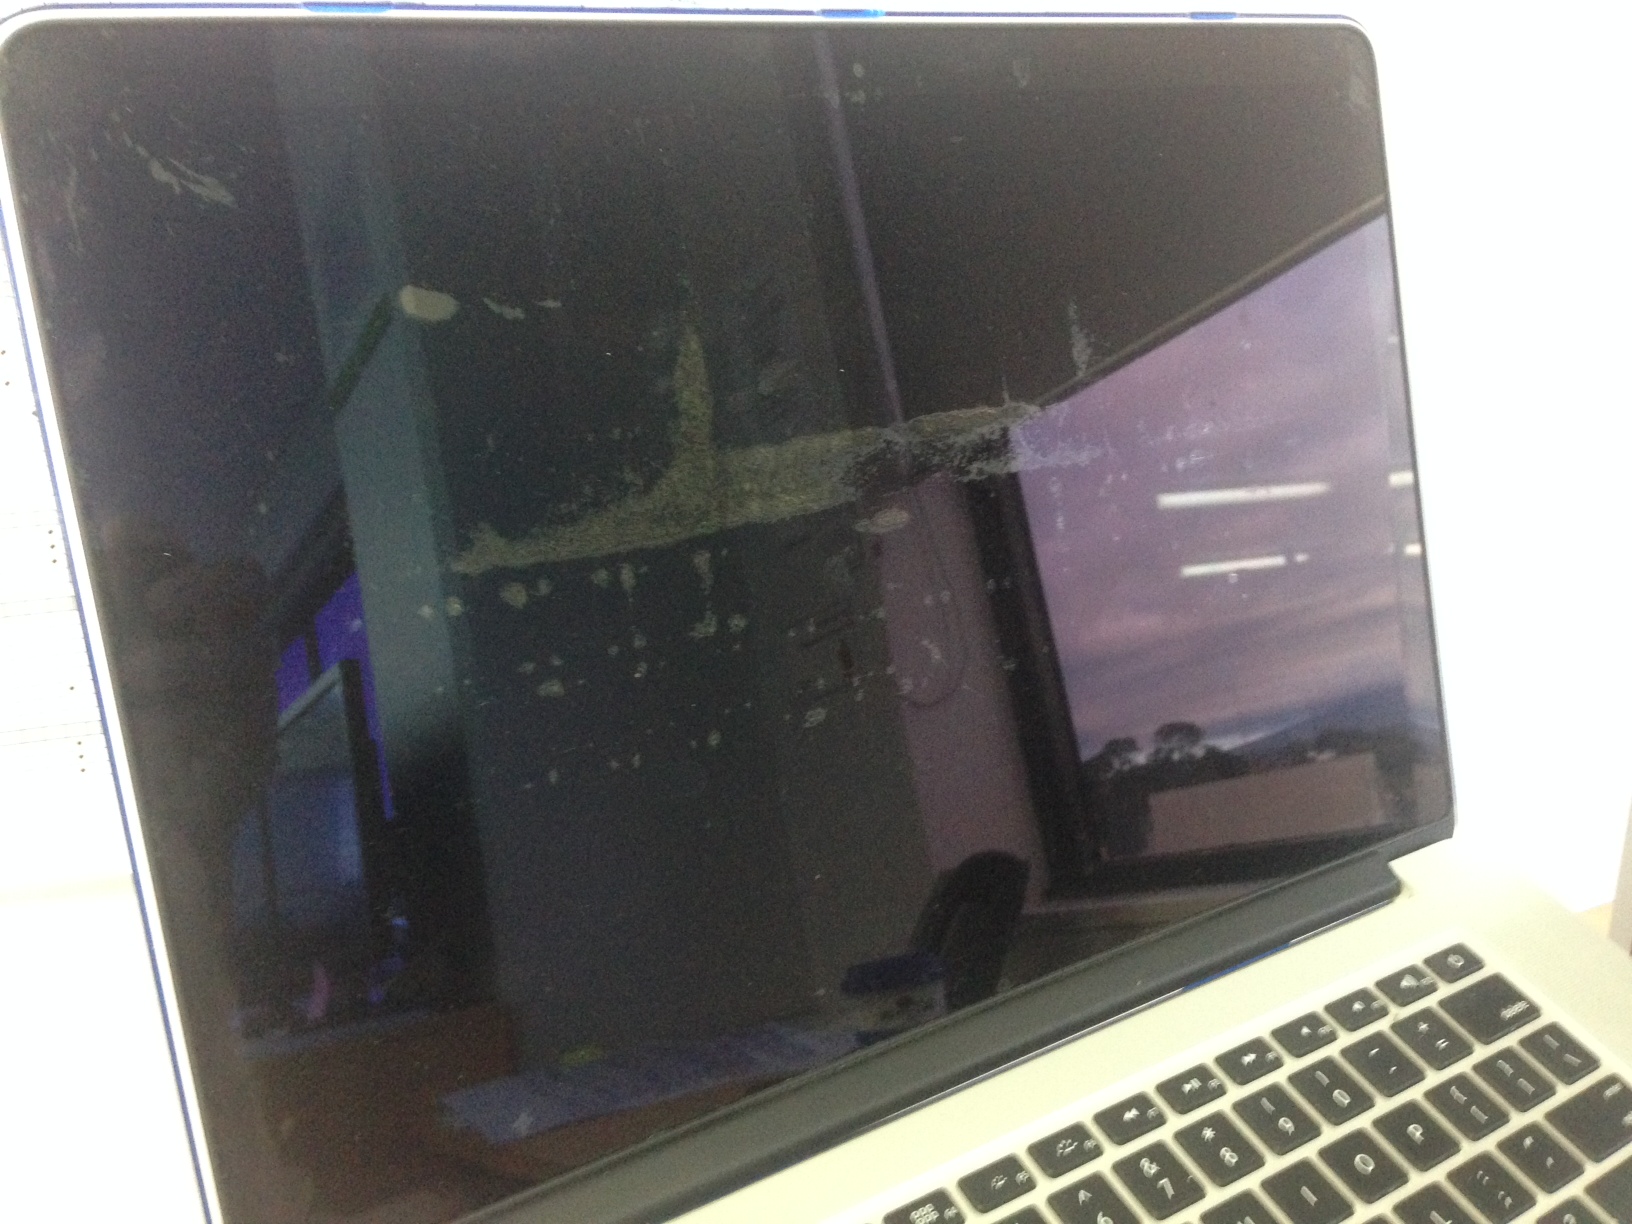 Macbook pro retina display smudge epson l3150 airprint